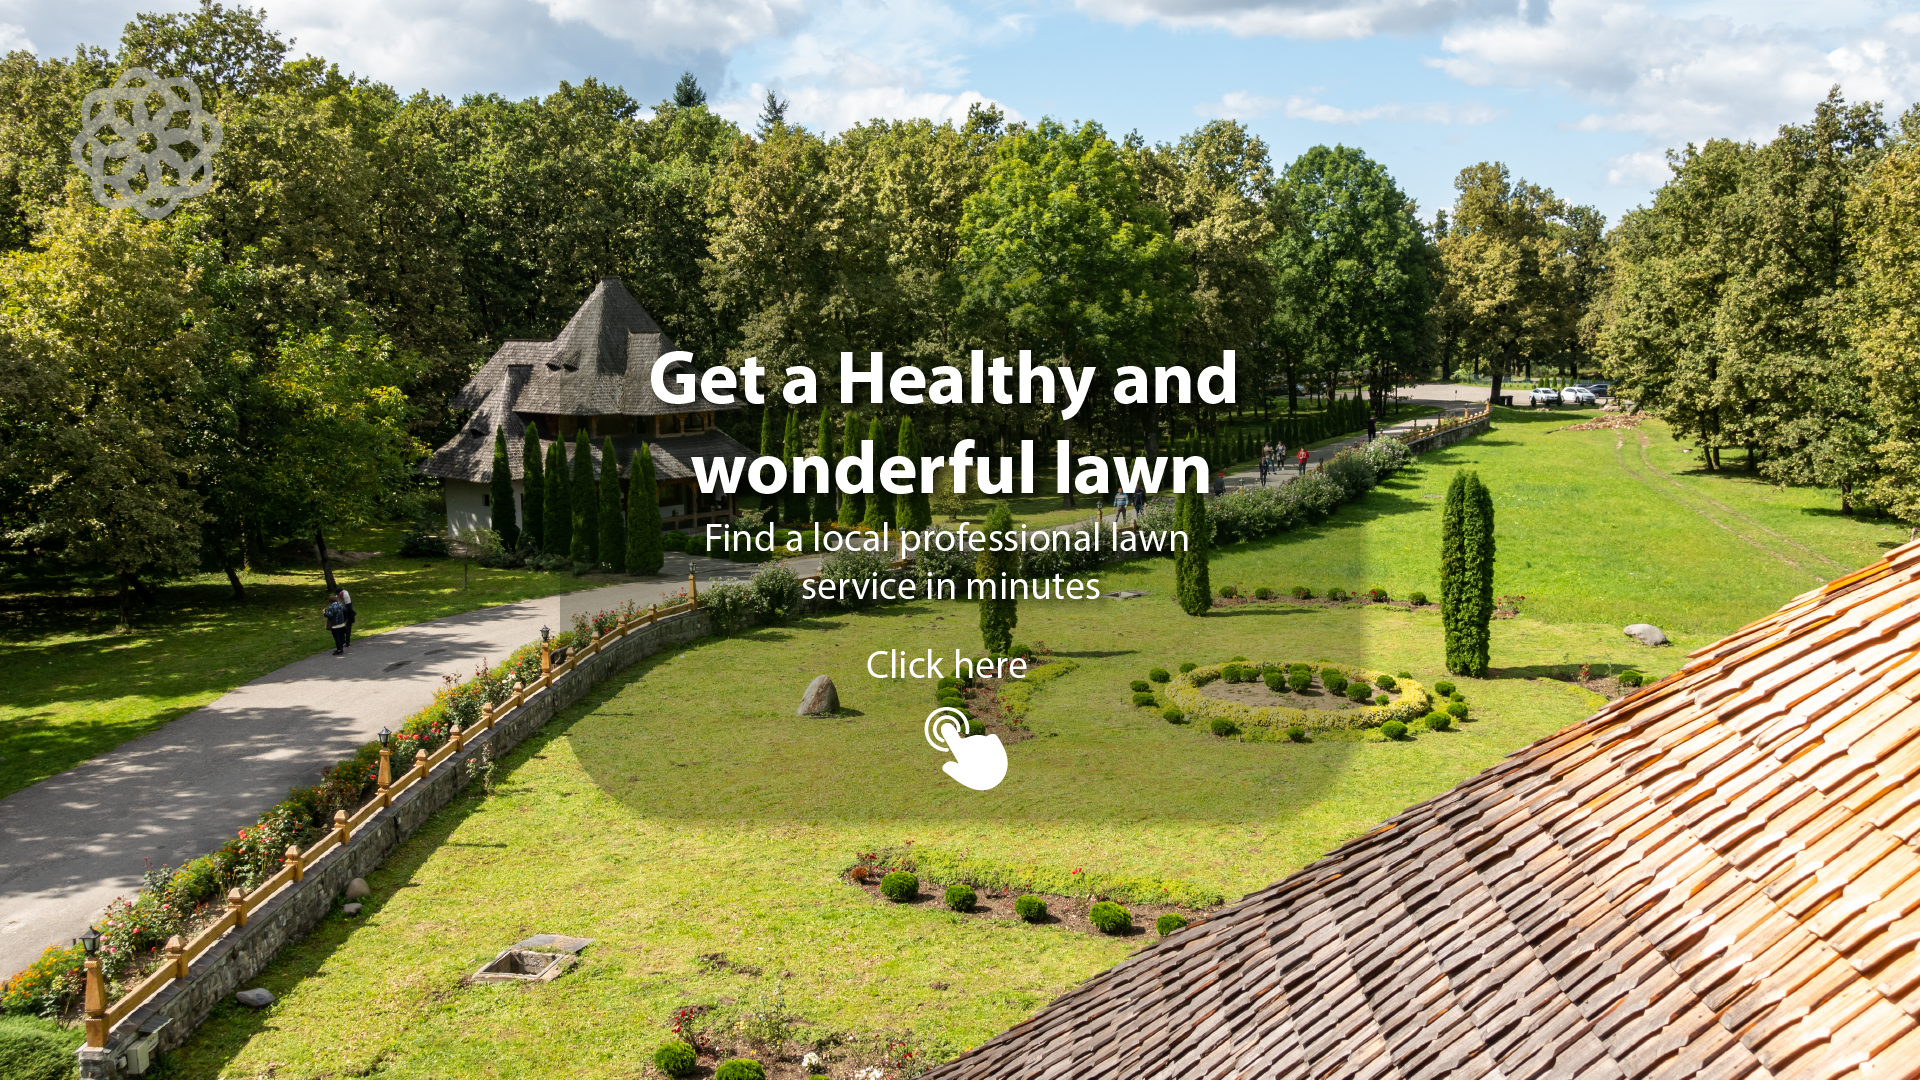 Get a healthy and wonderful lawn